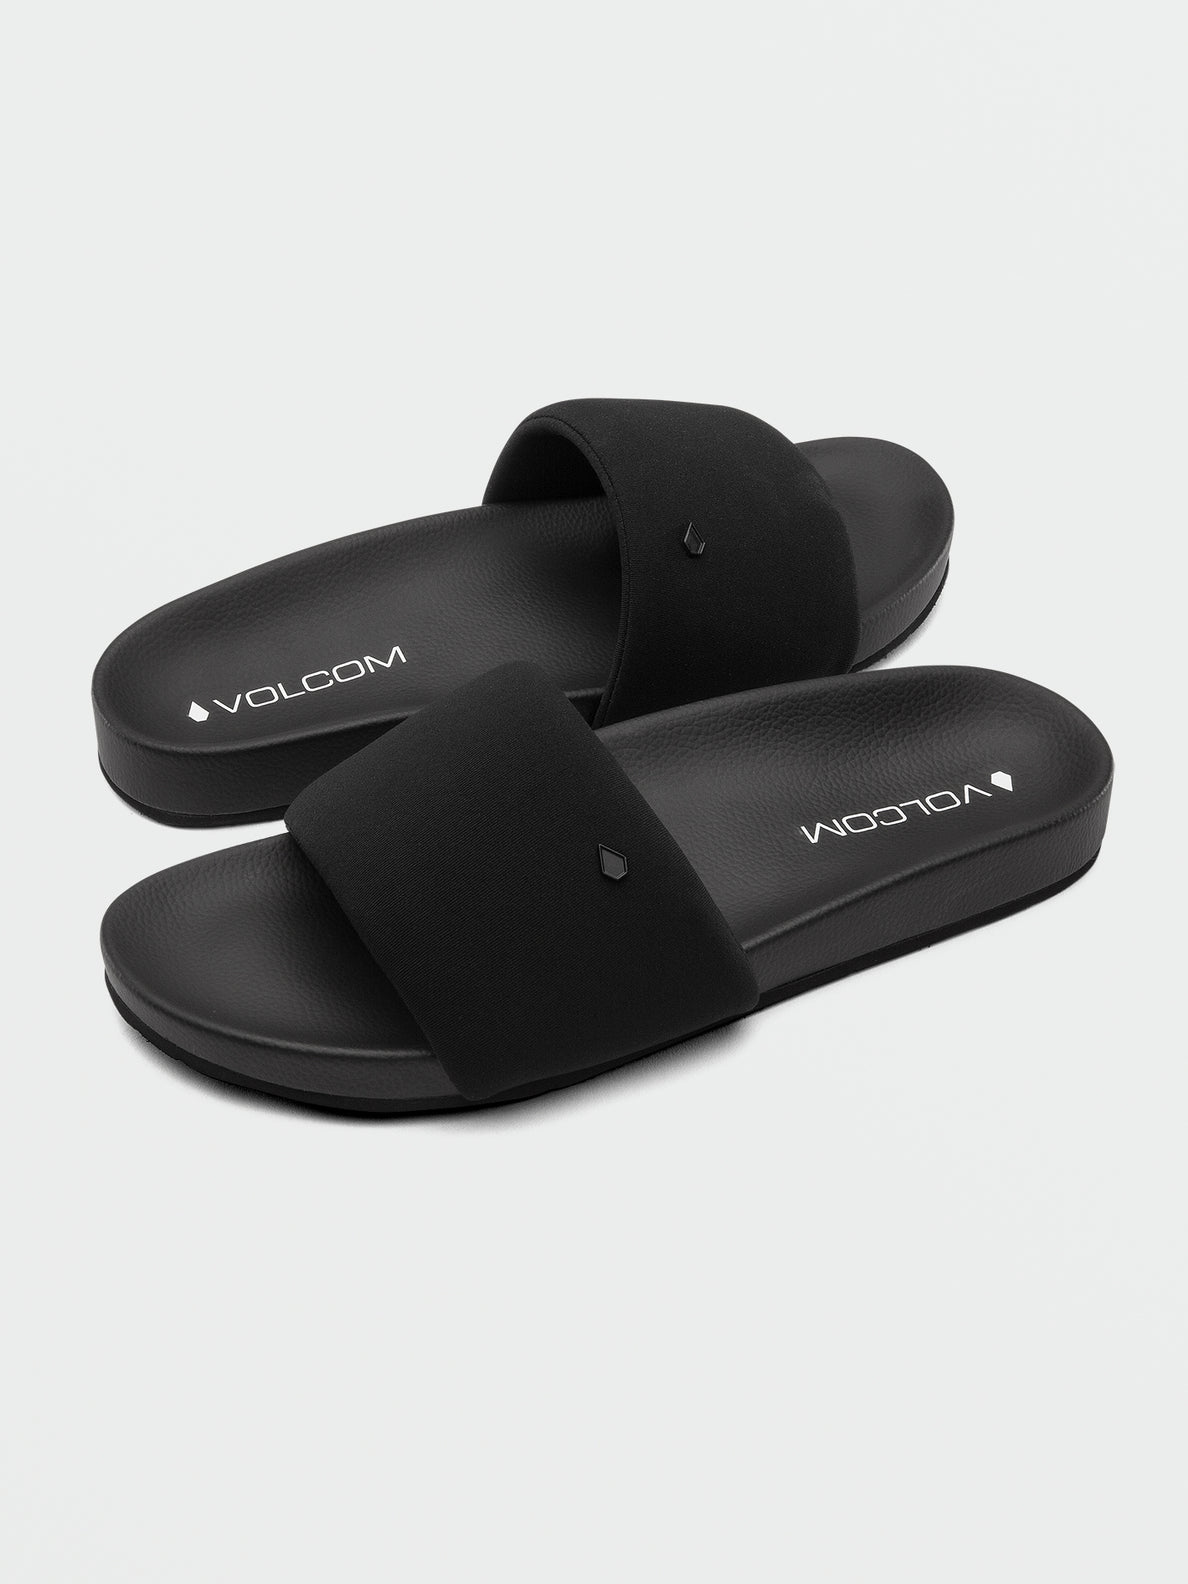 Volcom Cool Slide Sandals - Black Out (W0812300_BKO) [F]